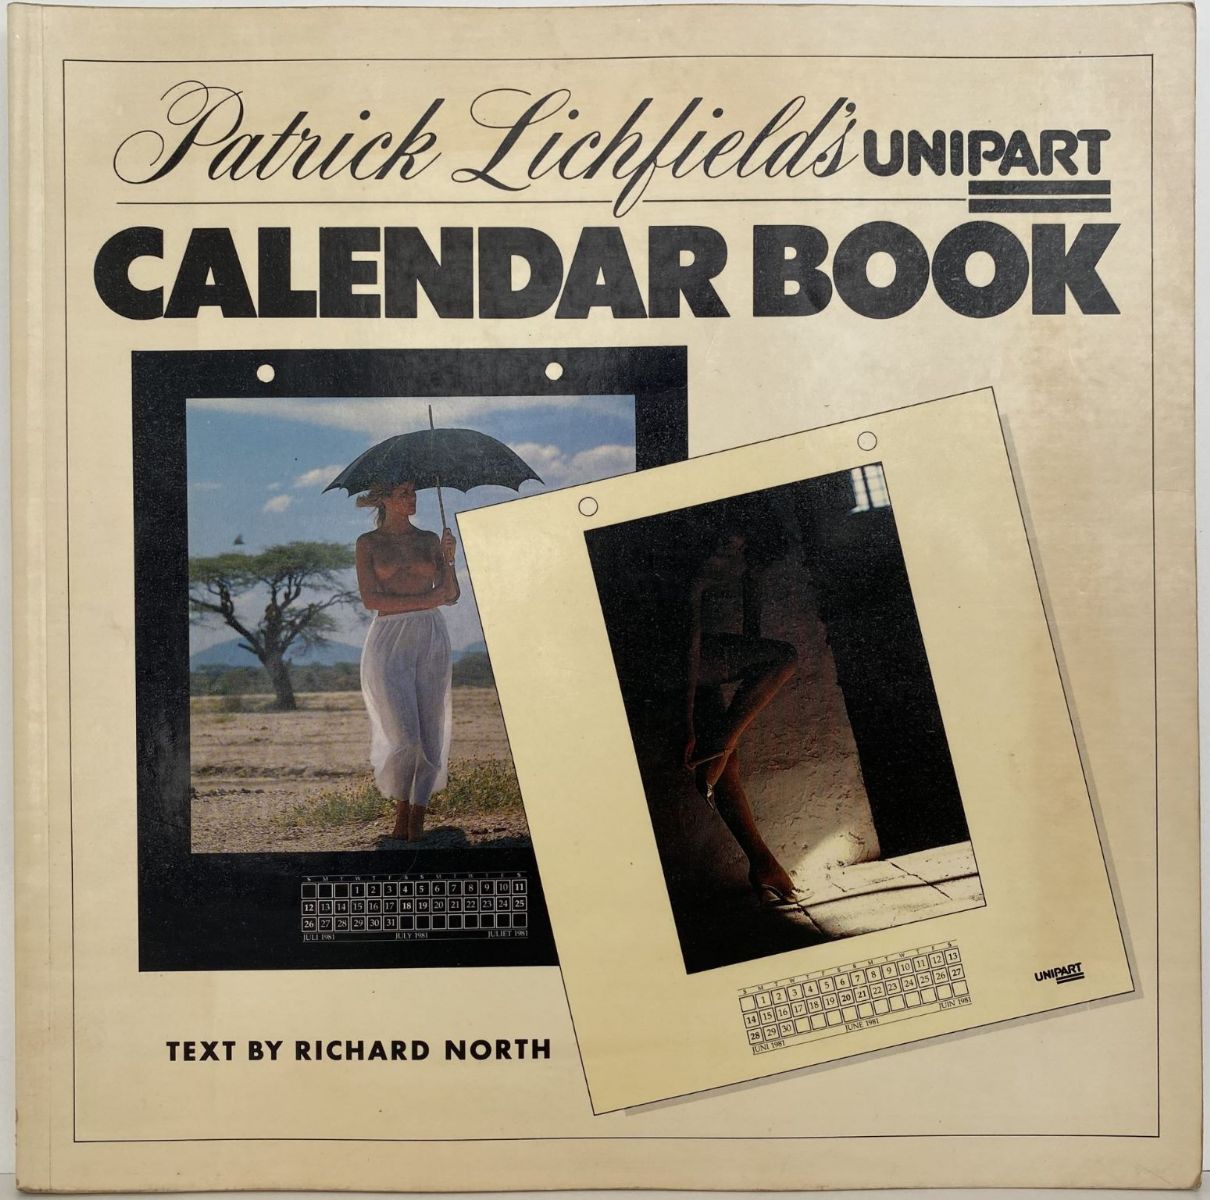 Patrick Litchfield's Unipart CALENDAR BOOK